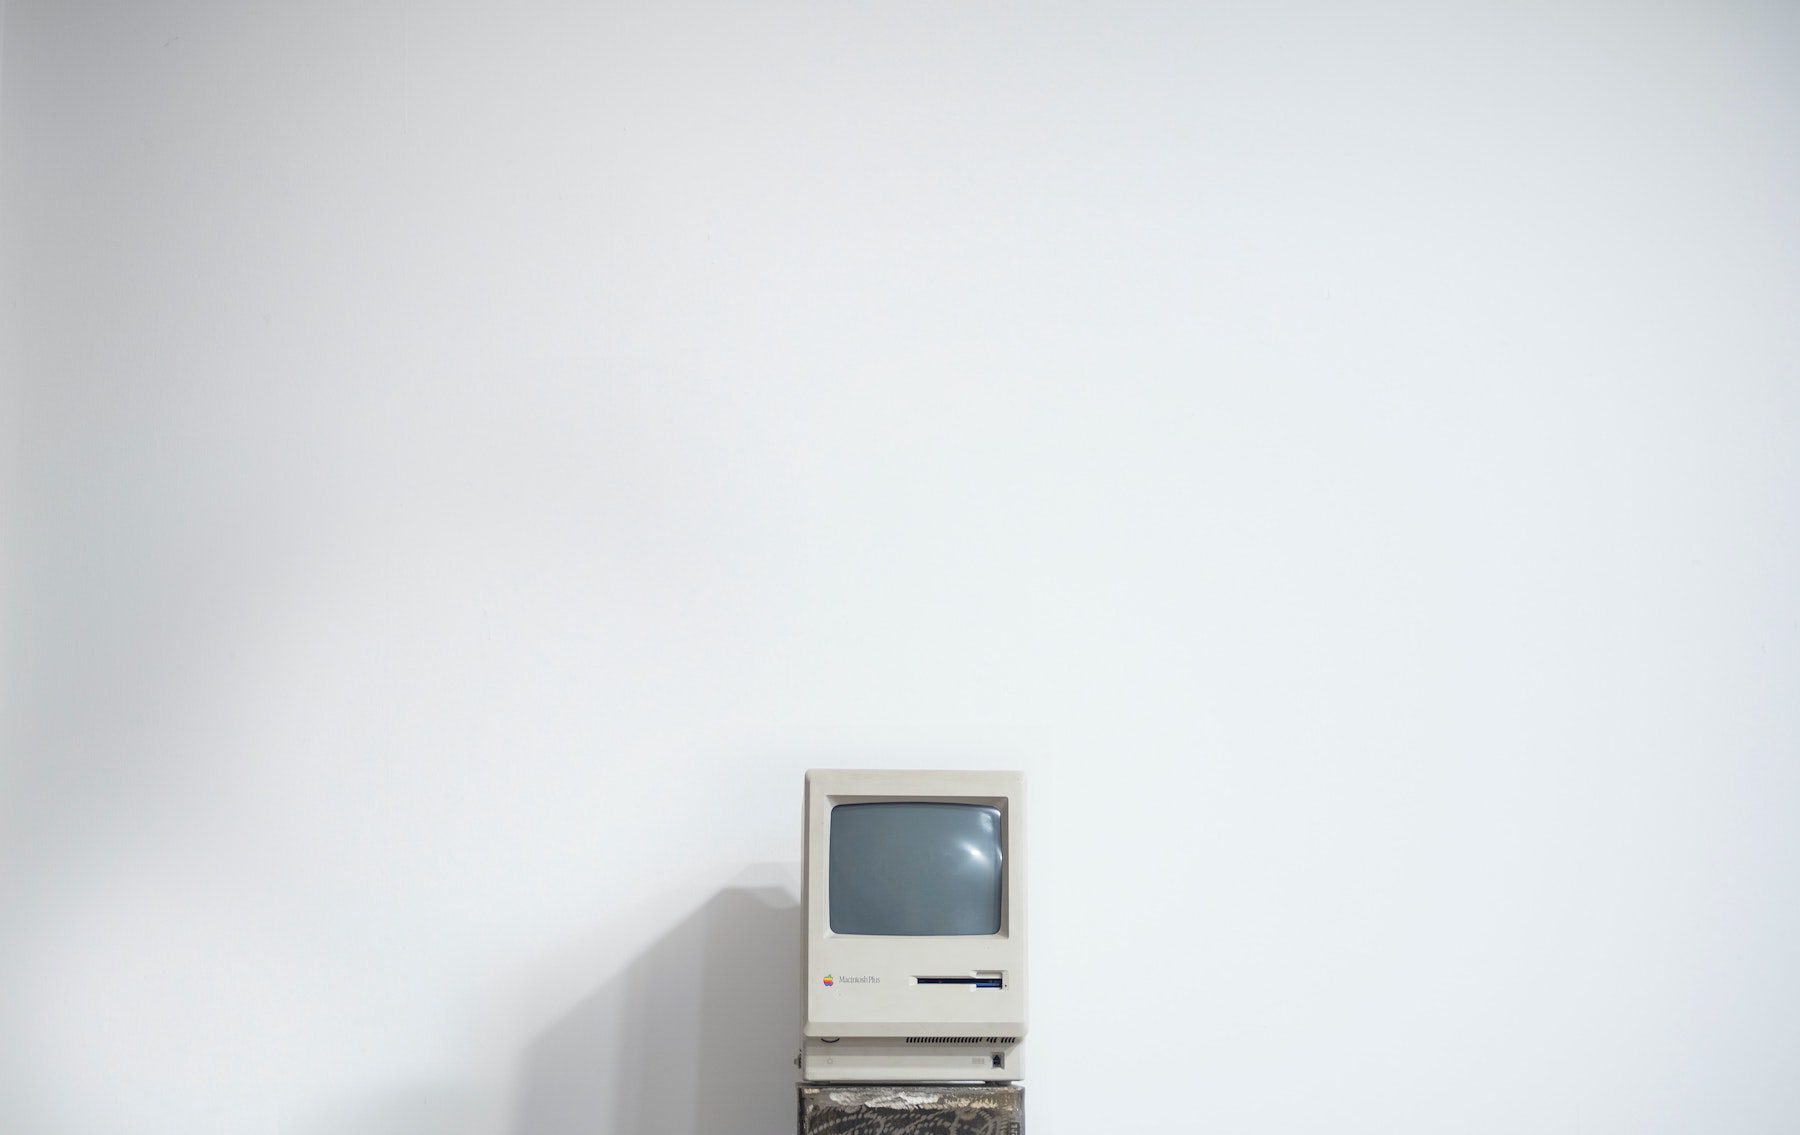 Vintage computer against a plain white wall. 